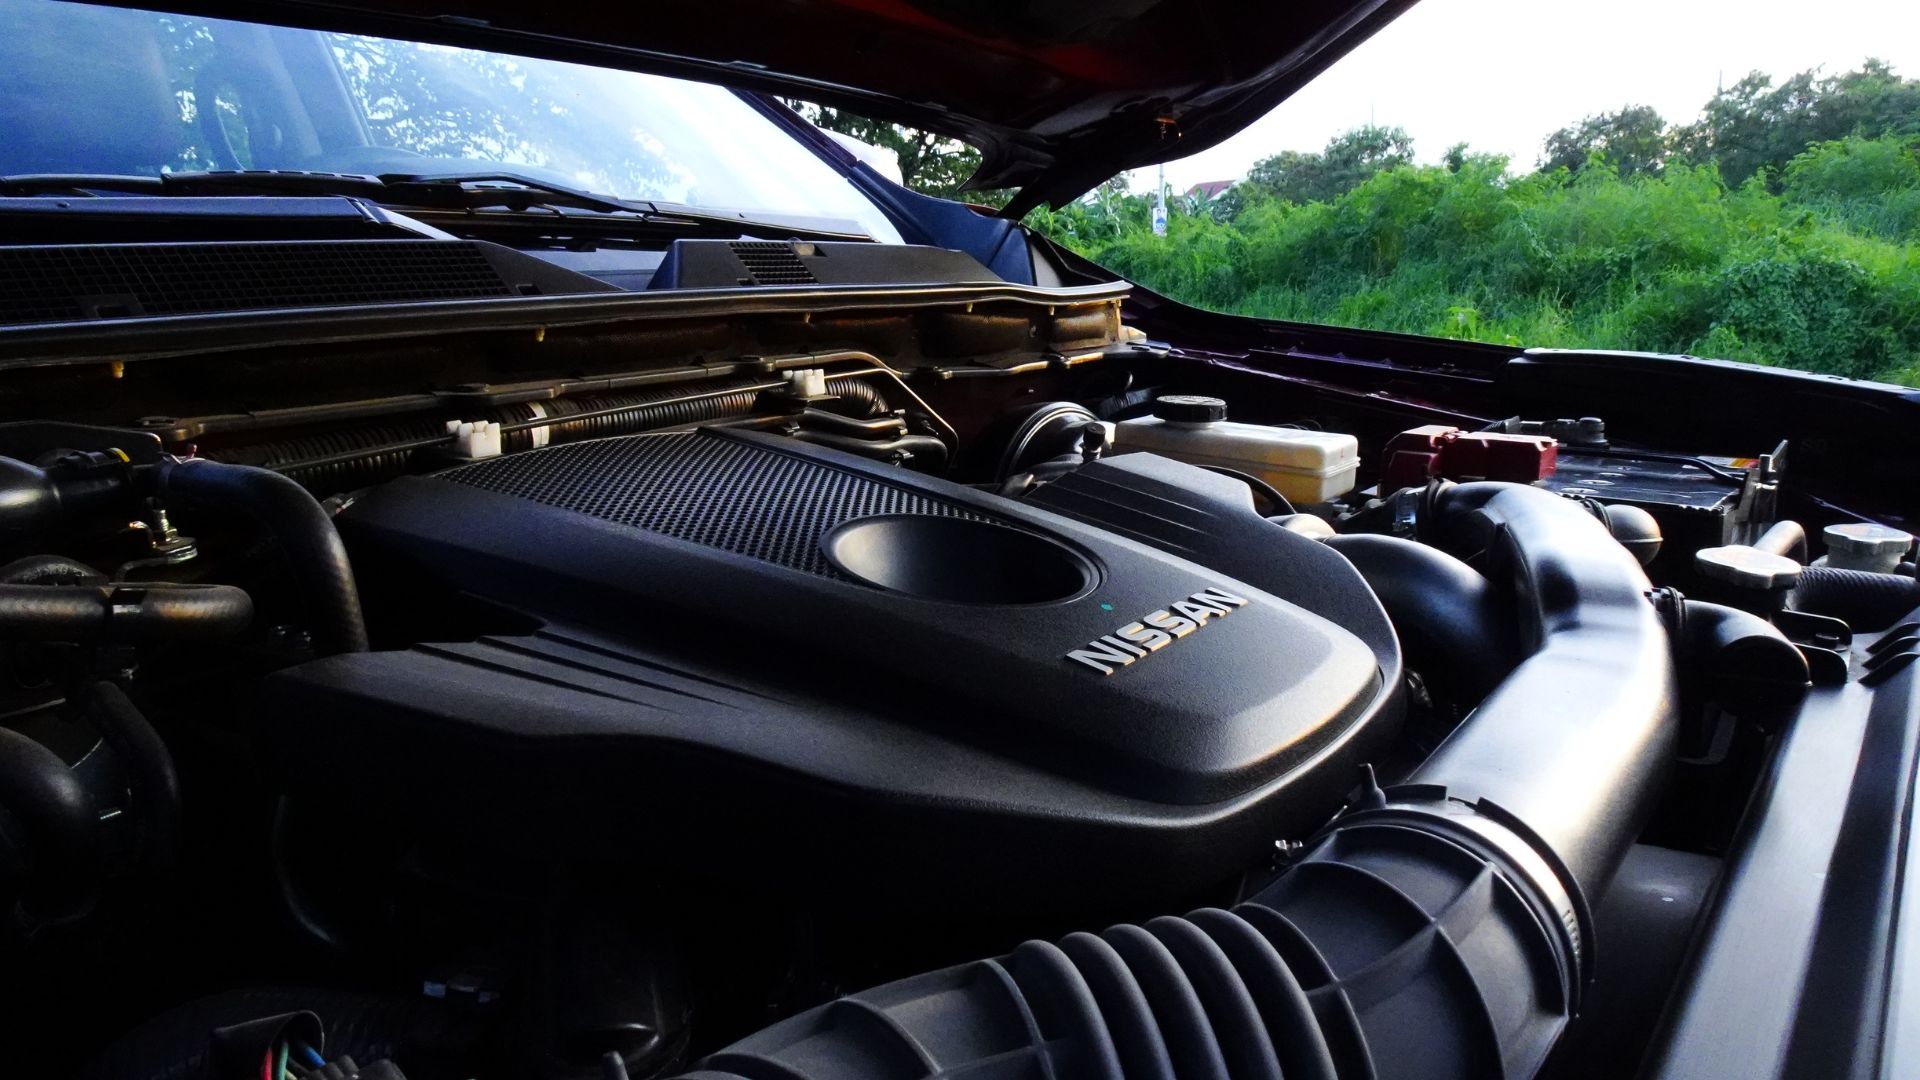 Nissan Terra VL 4x4 review engine